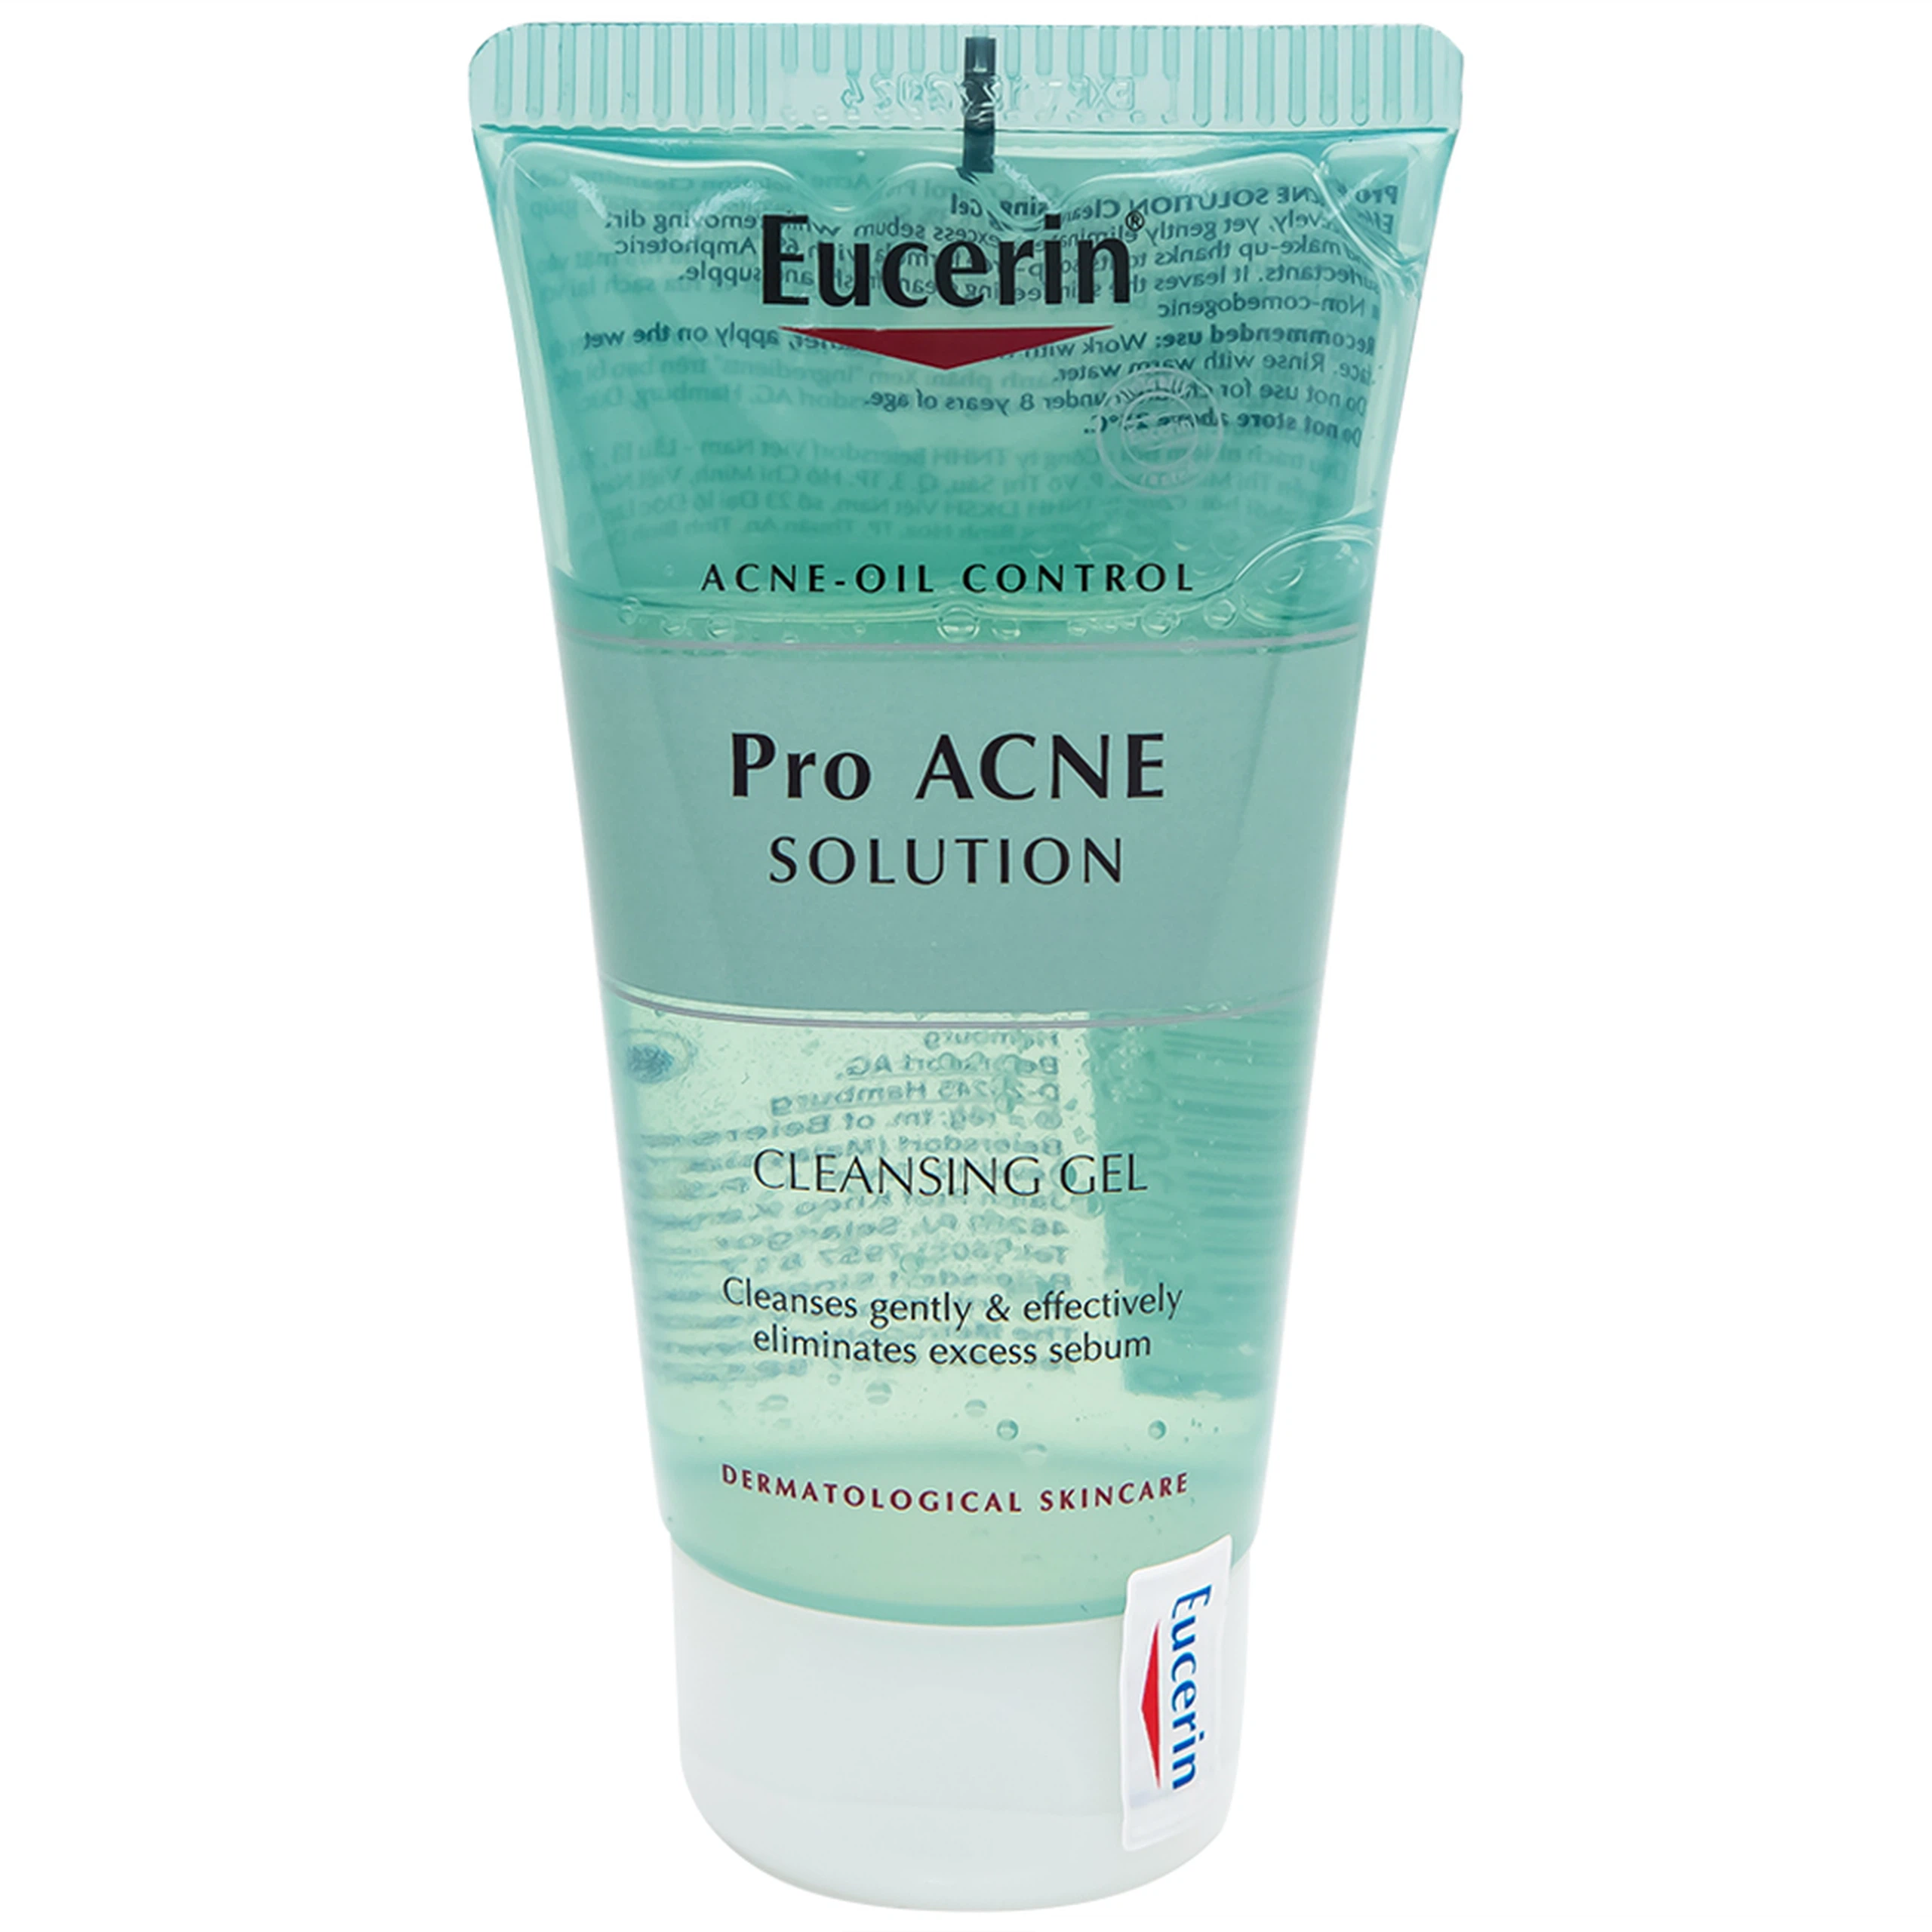 Gel rửa mặt Eucerin Ance Oil Control Pro Acne Solution Cleansing Gel dành cho da mụn (75ml)